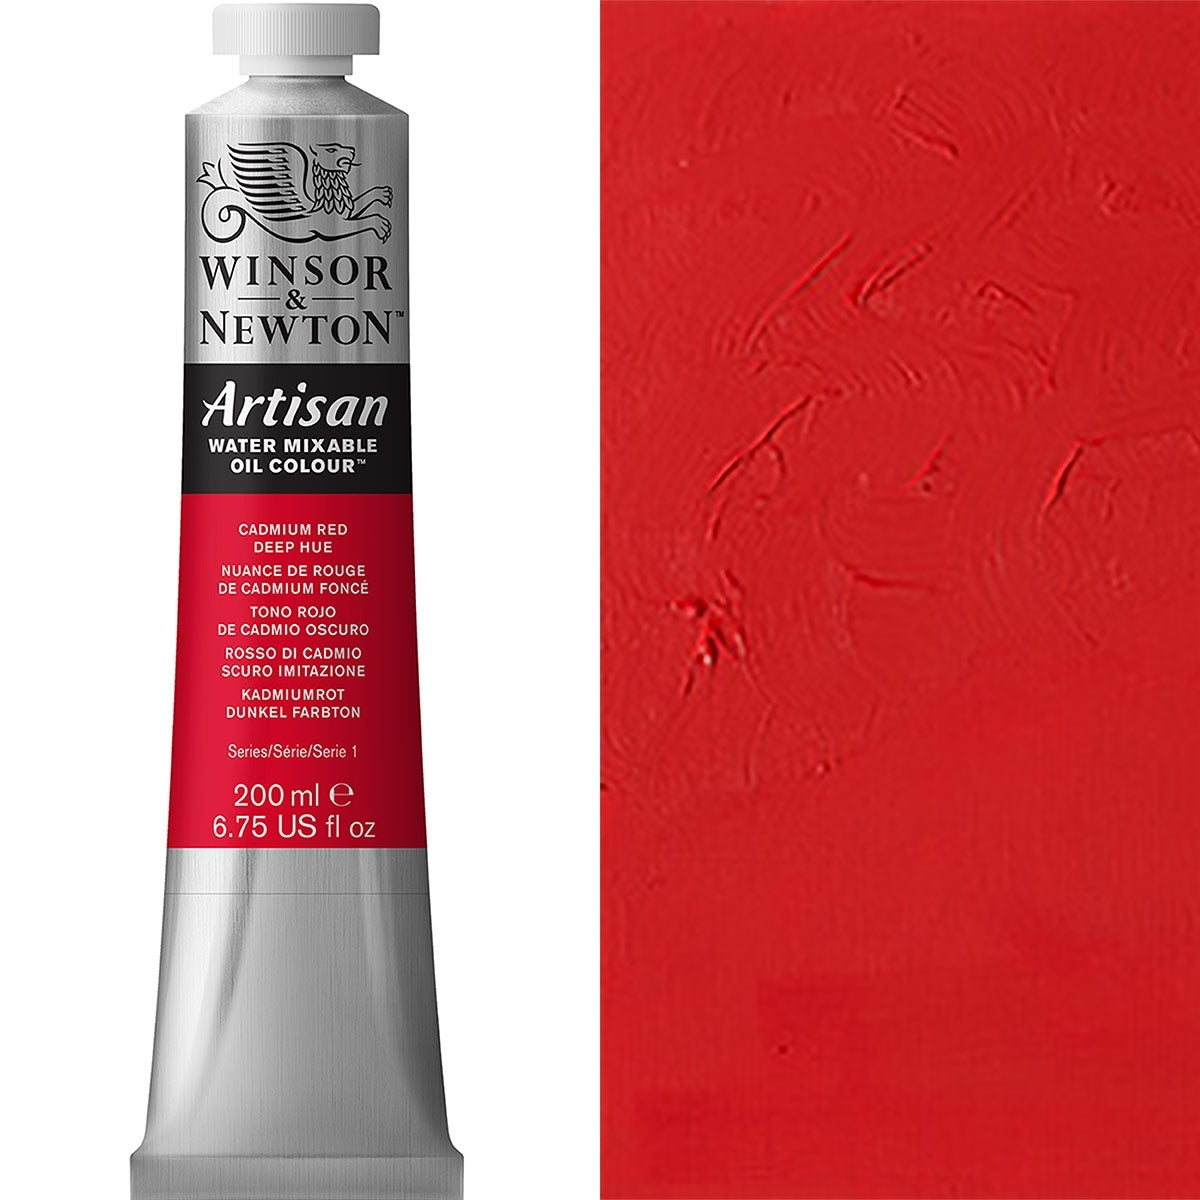 Winsor and Newton - Artisan Oil Colour Watermixable - 200ml - Cadmium Red Deep Hue